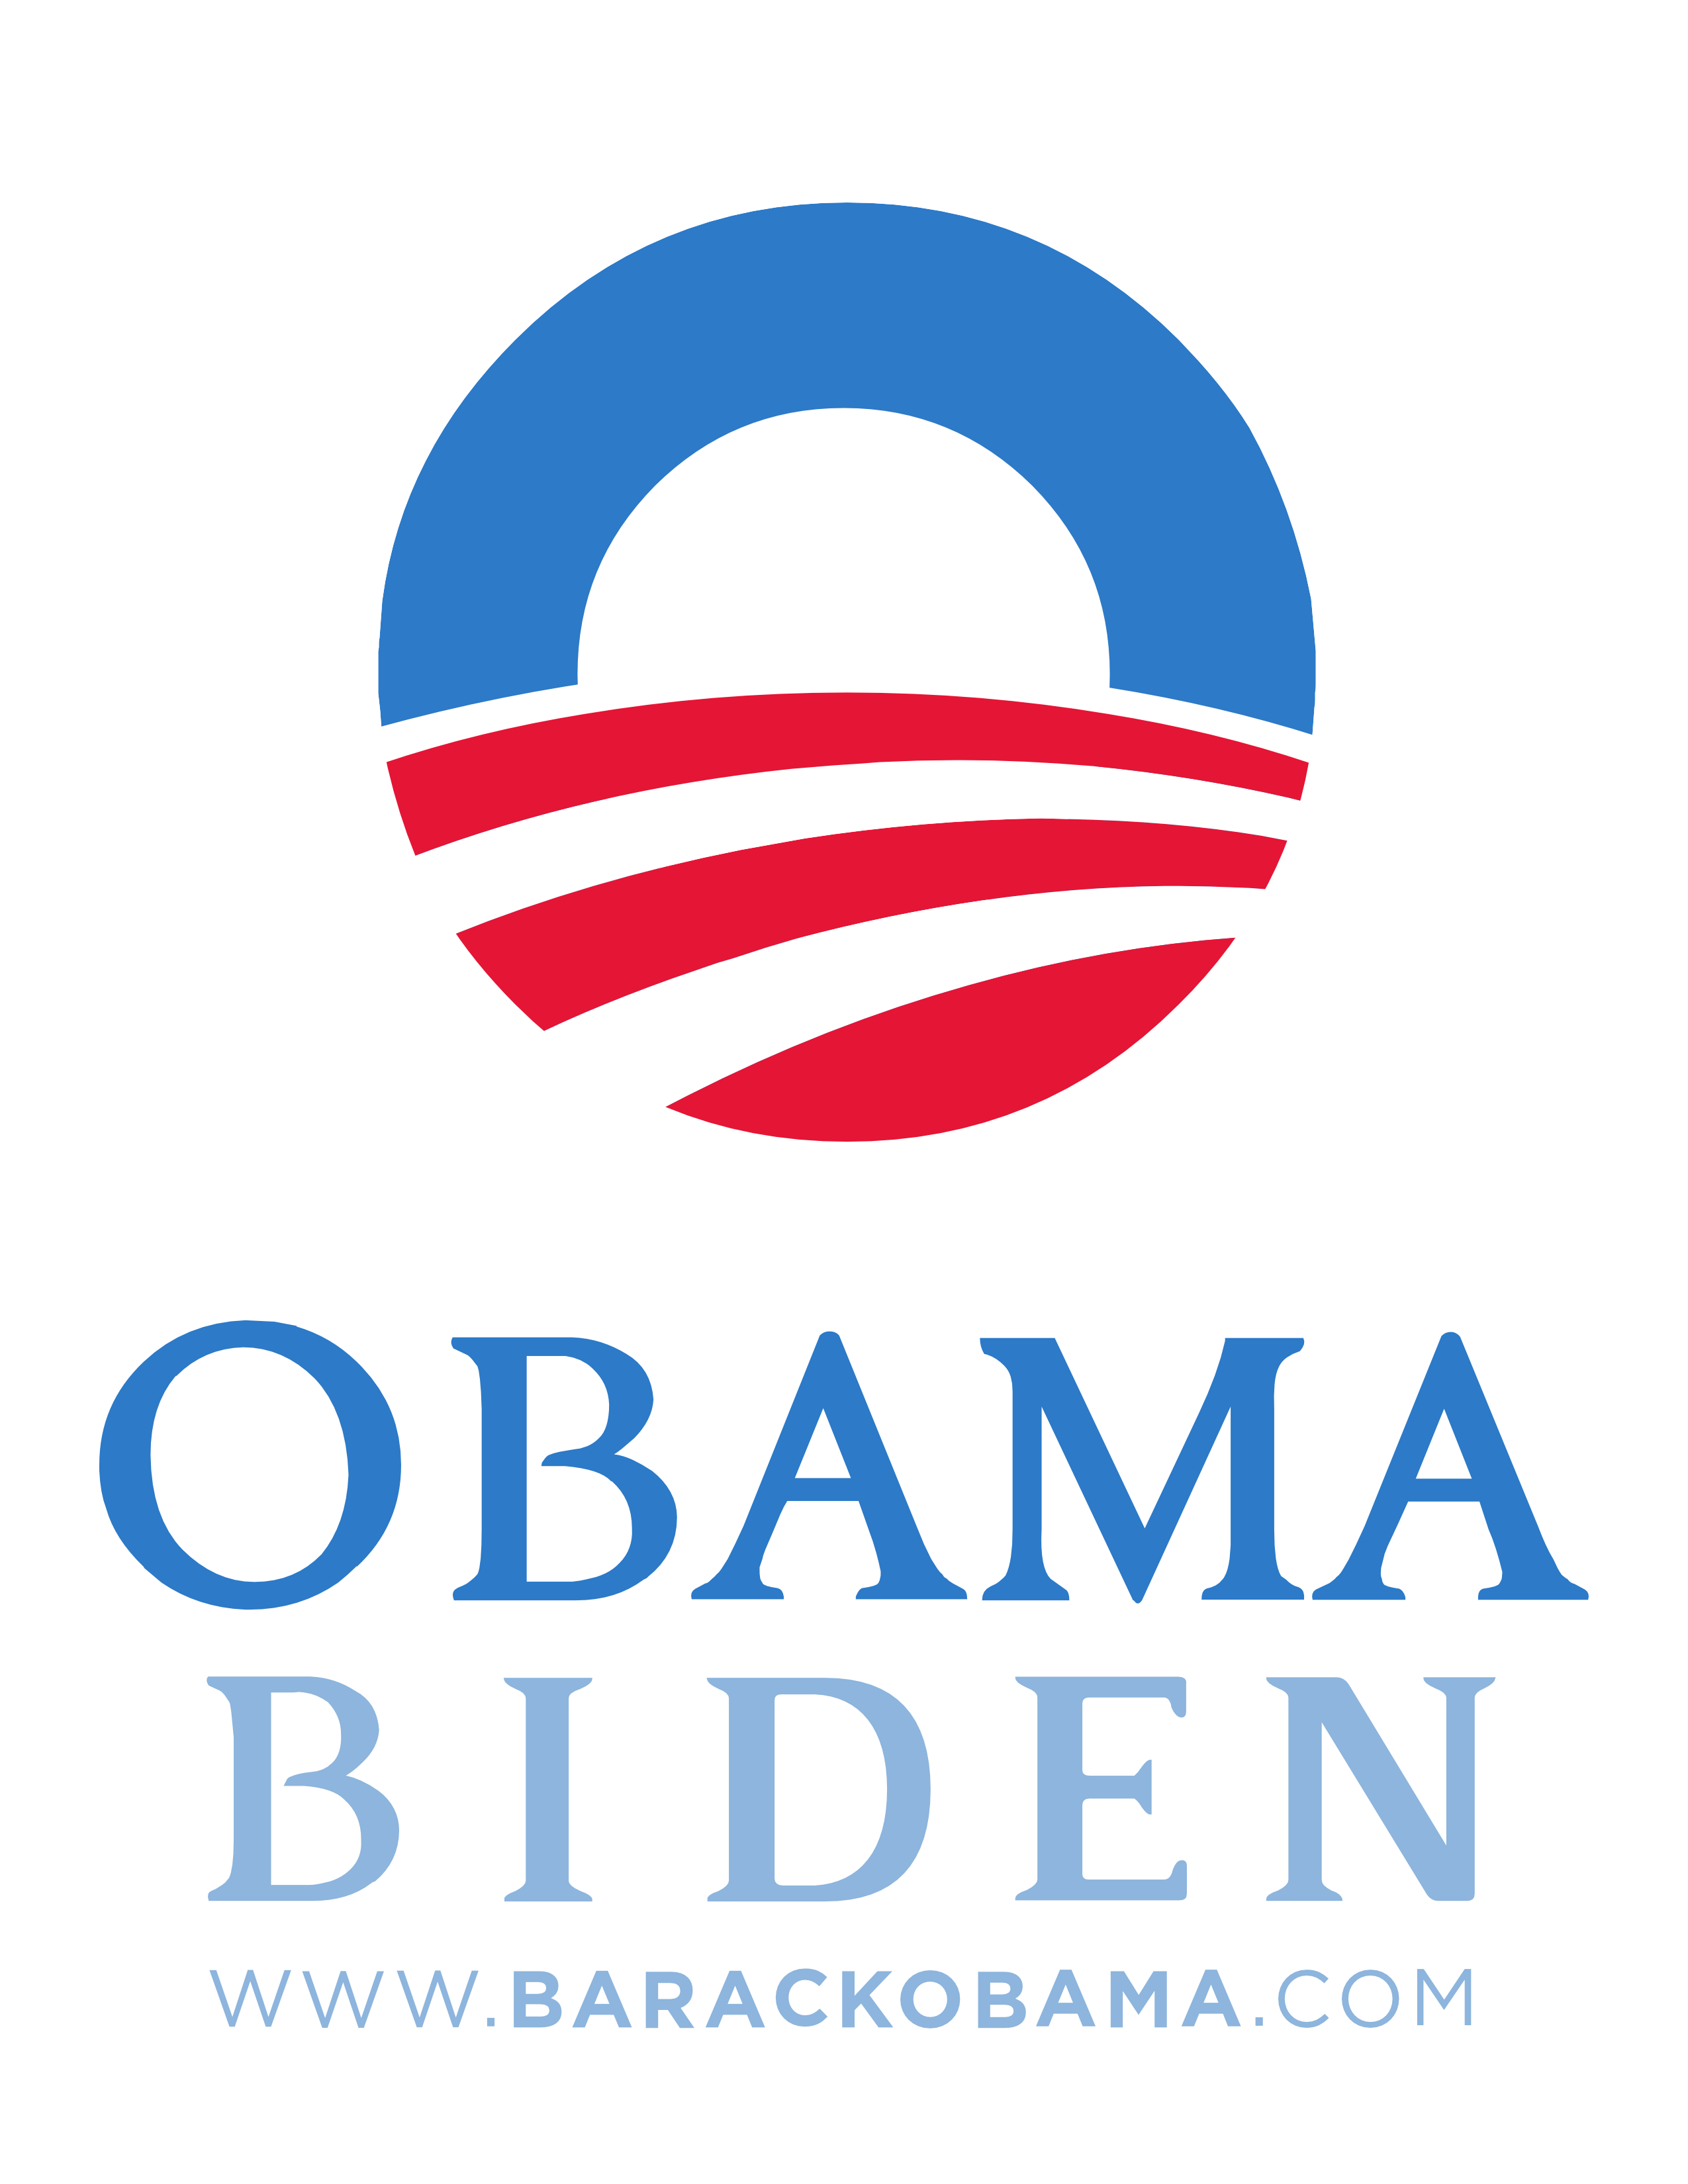 High Resolution Obama Biden Logos   Obama Media